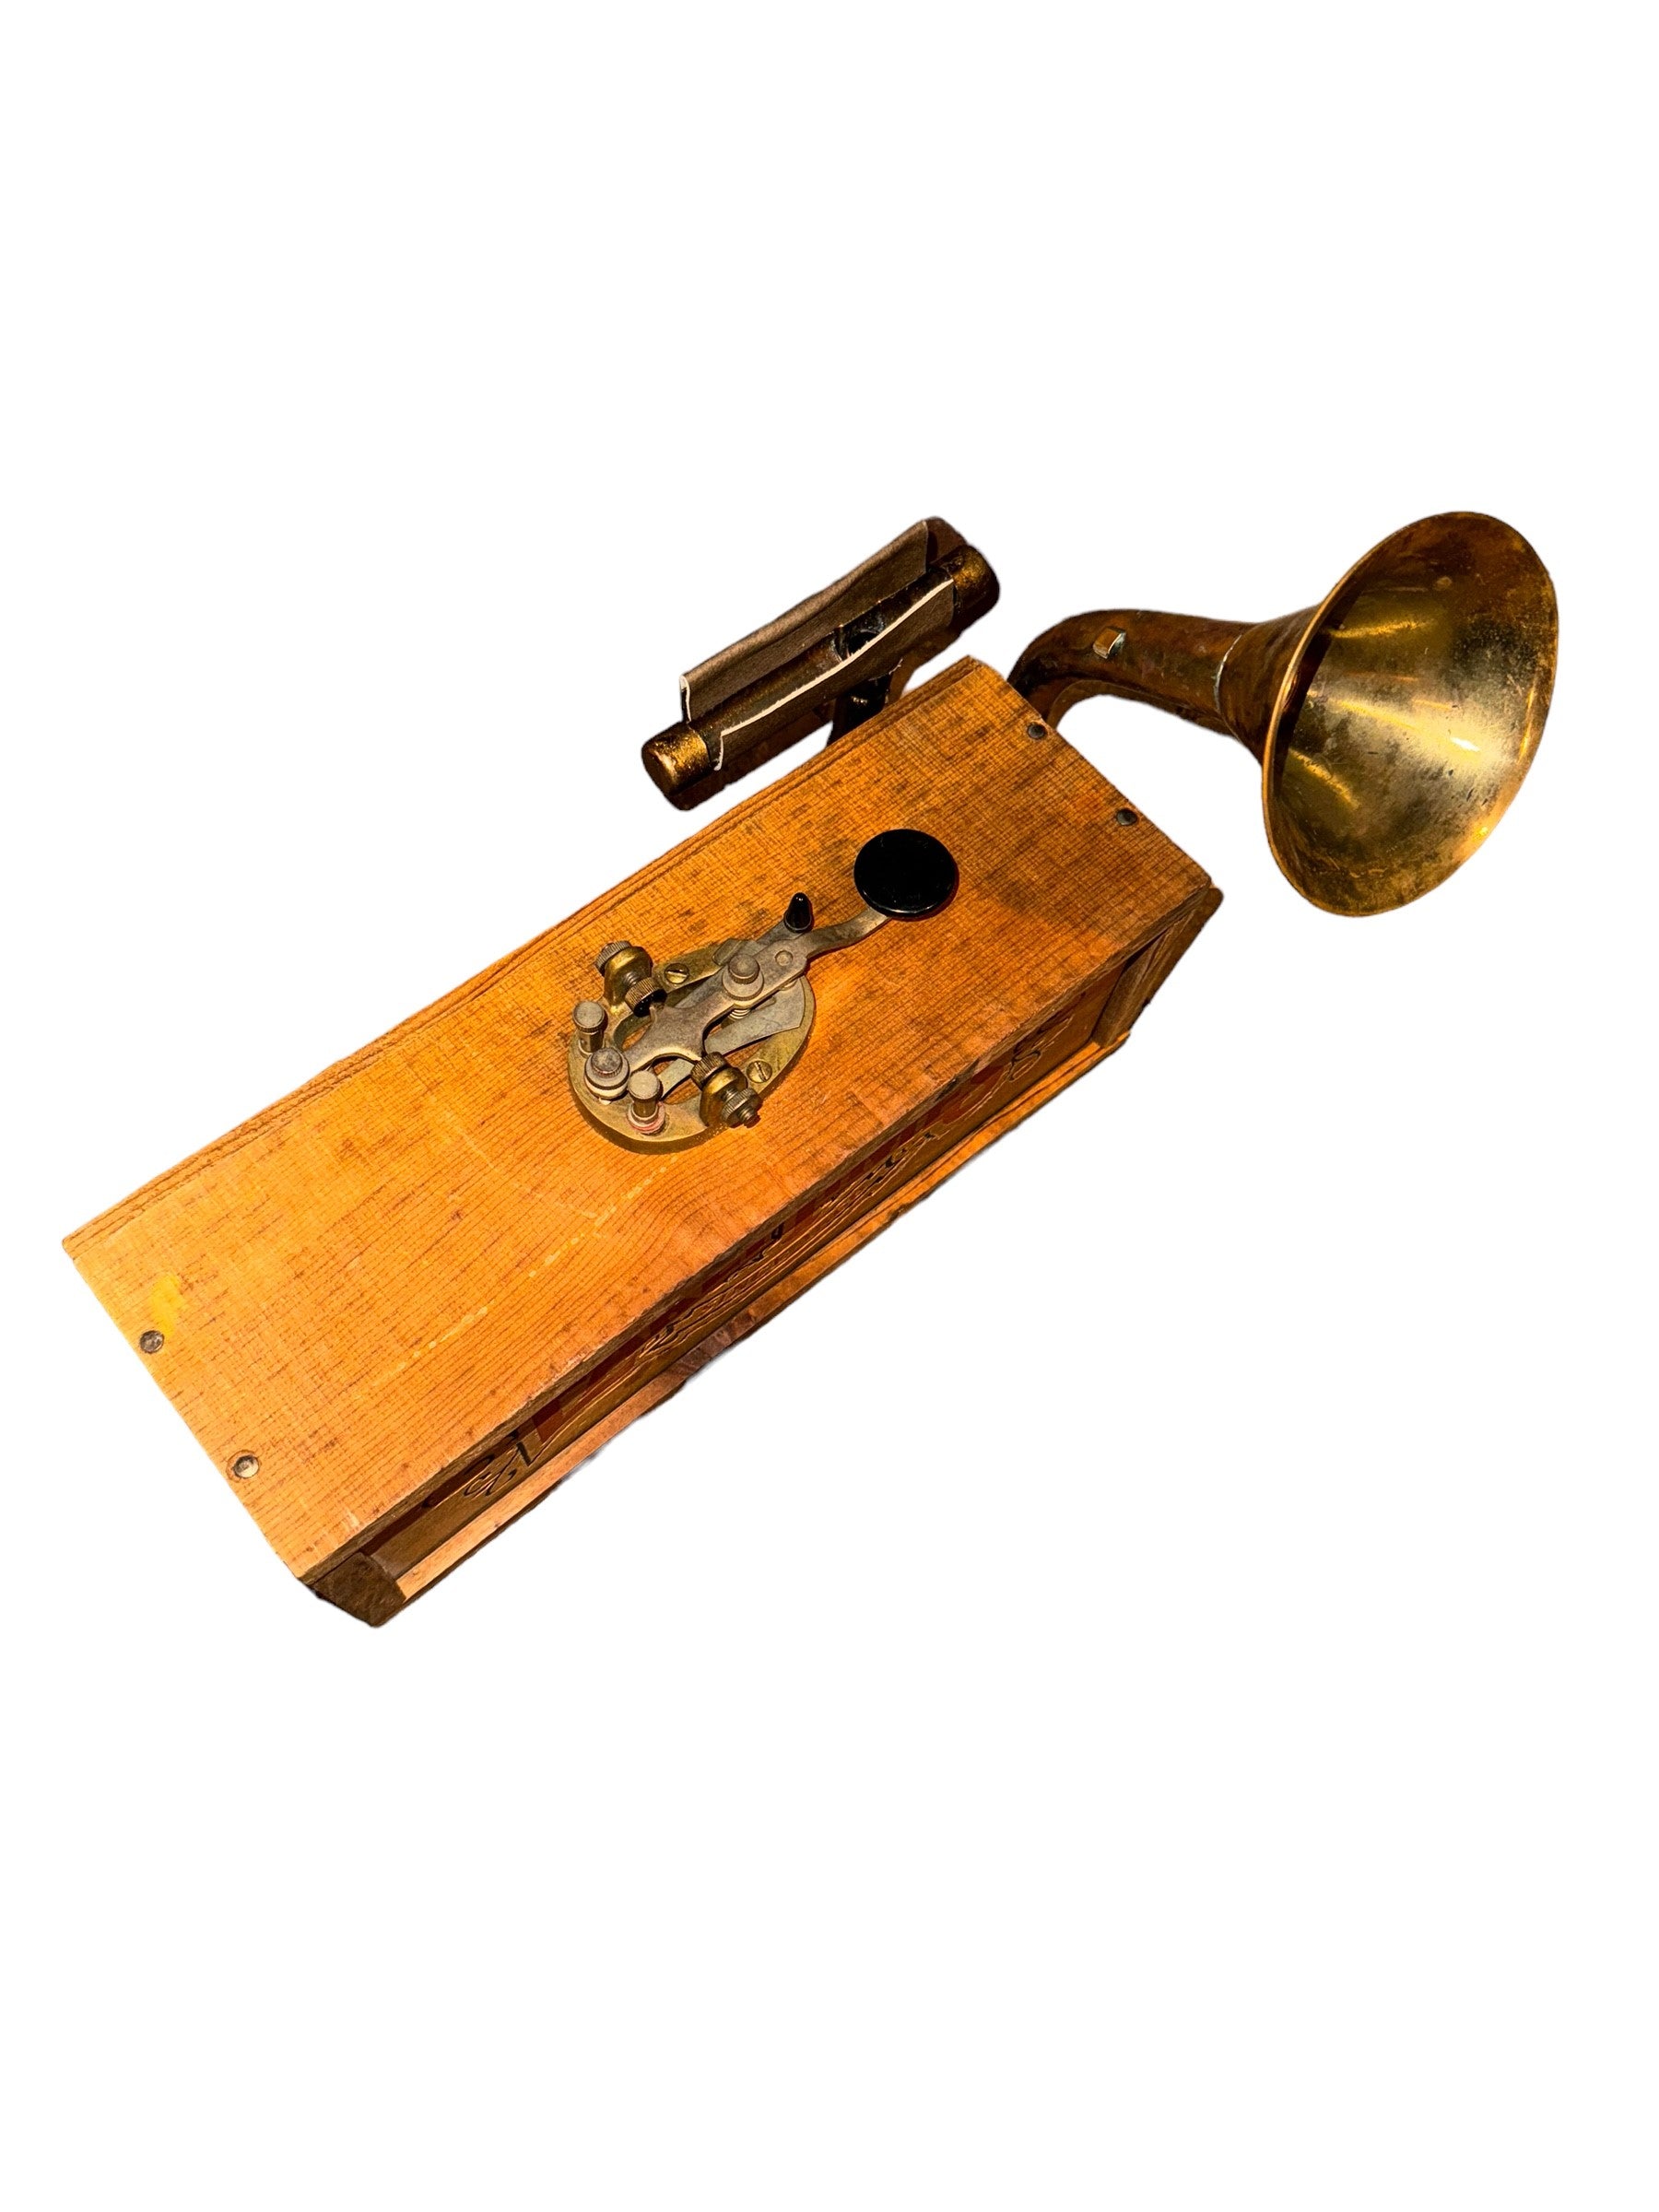 The Telegraph Key